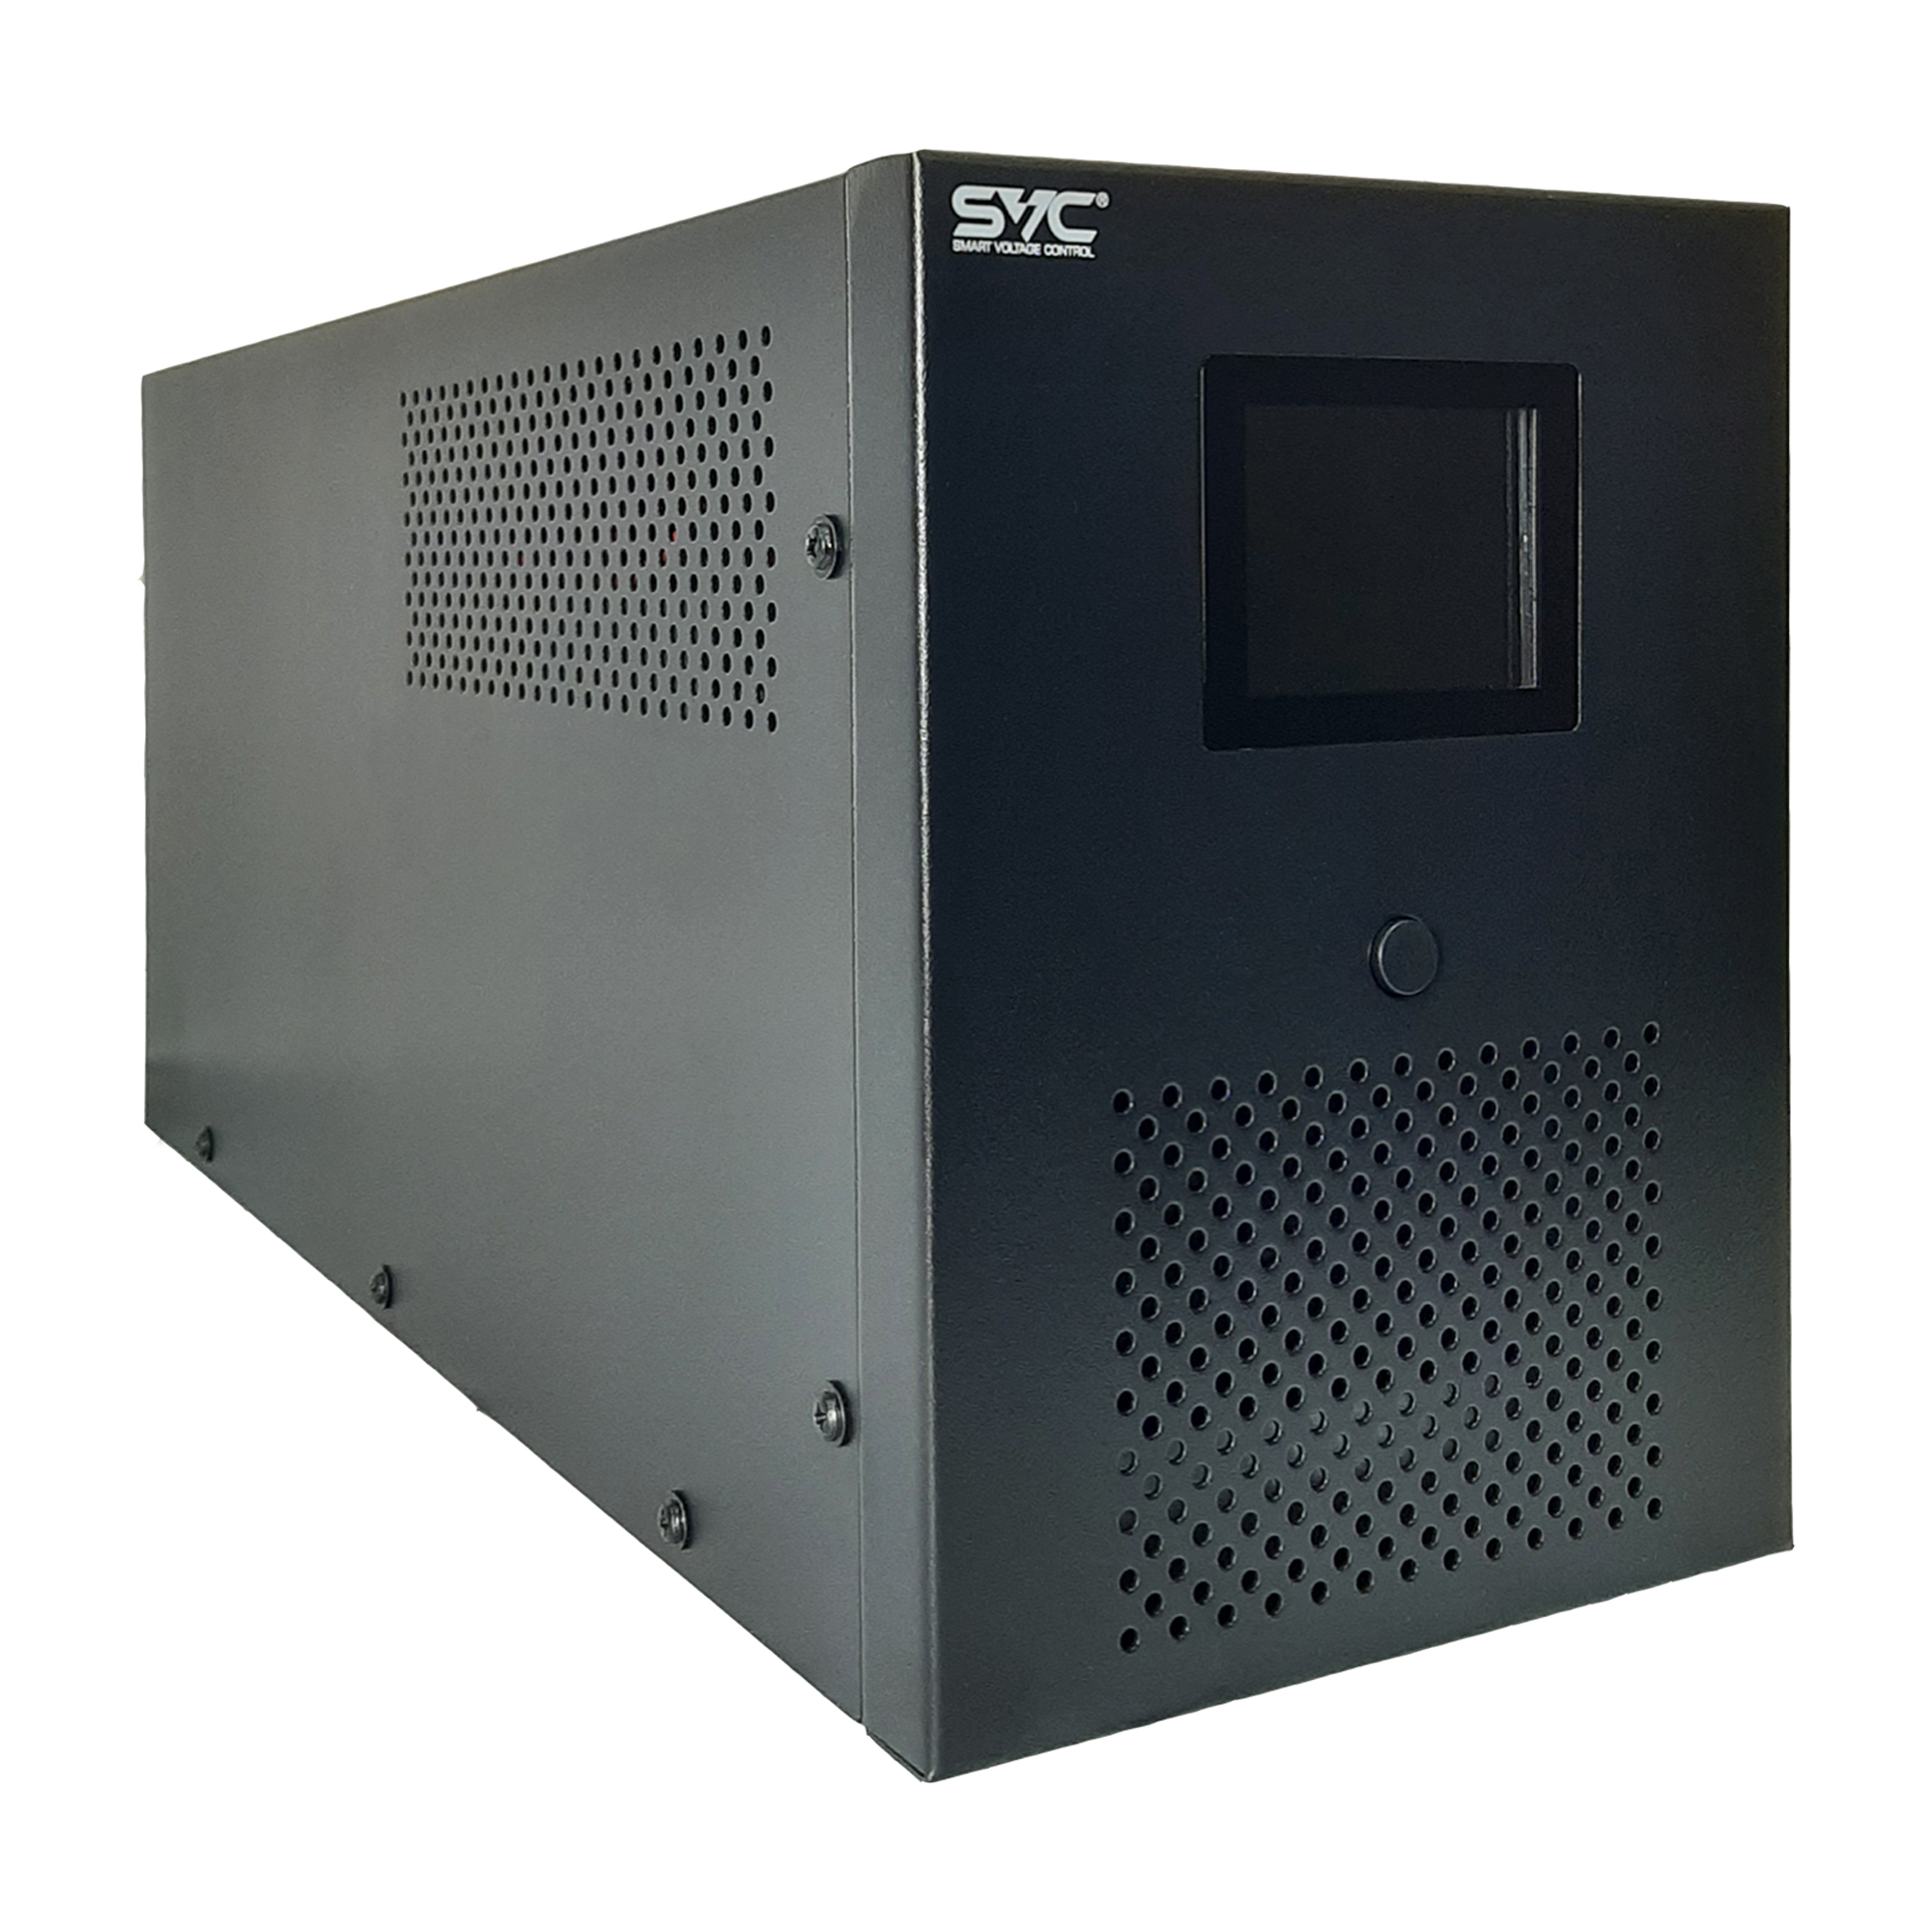 ИБП SVC V-3000-R-LCD, 3000 В·А, 1.8 кВт, EURO, розеток - 4, USB, черный (V-3000-R-LCD)